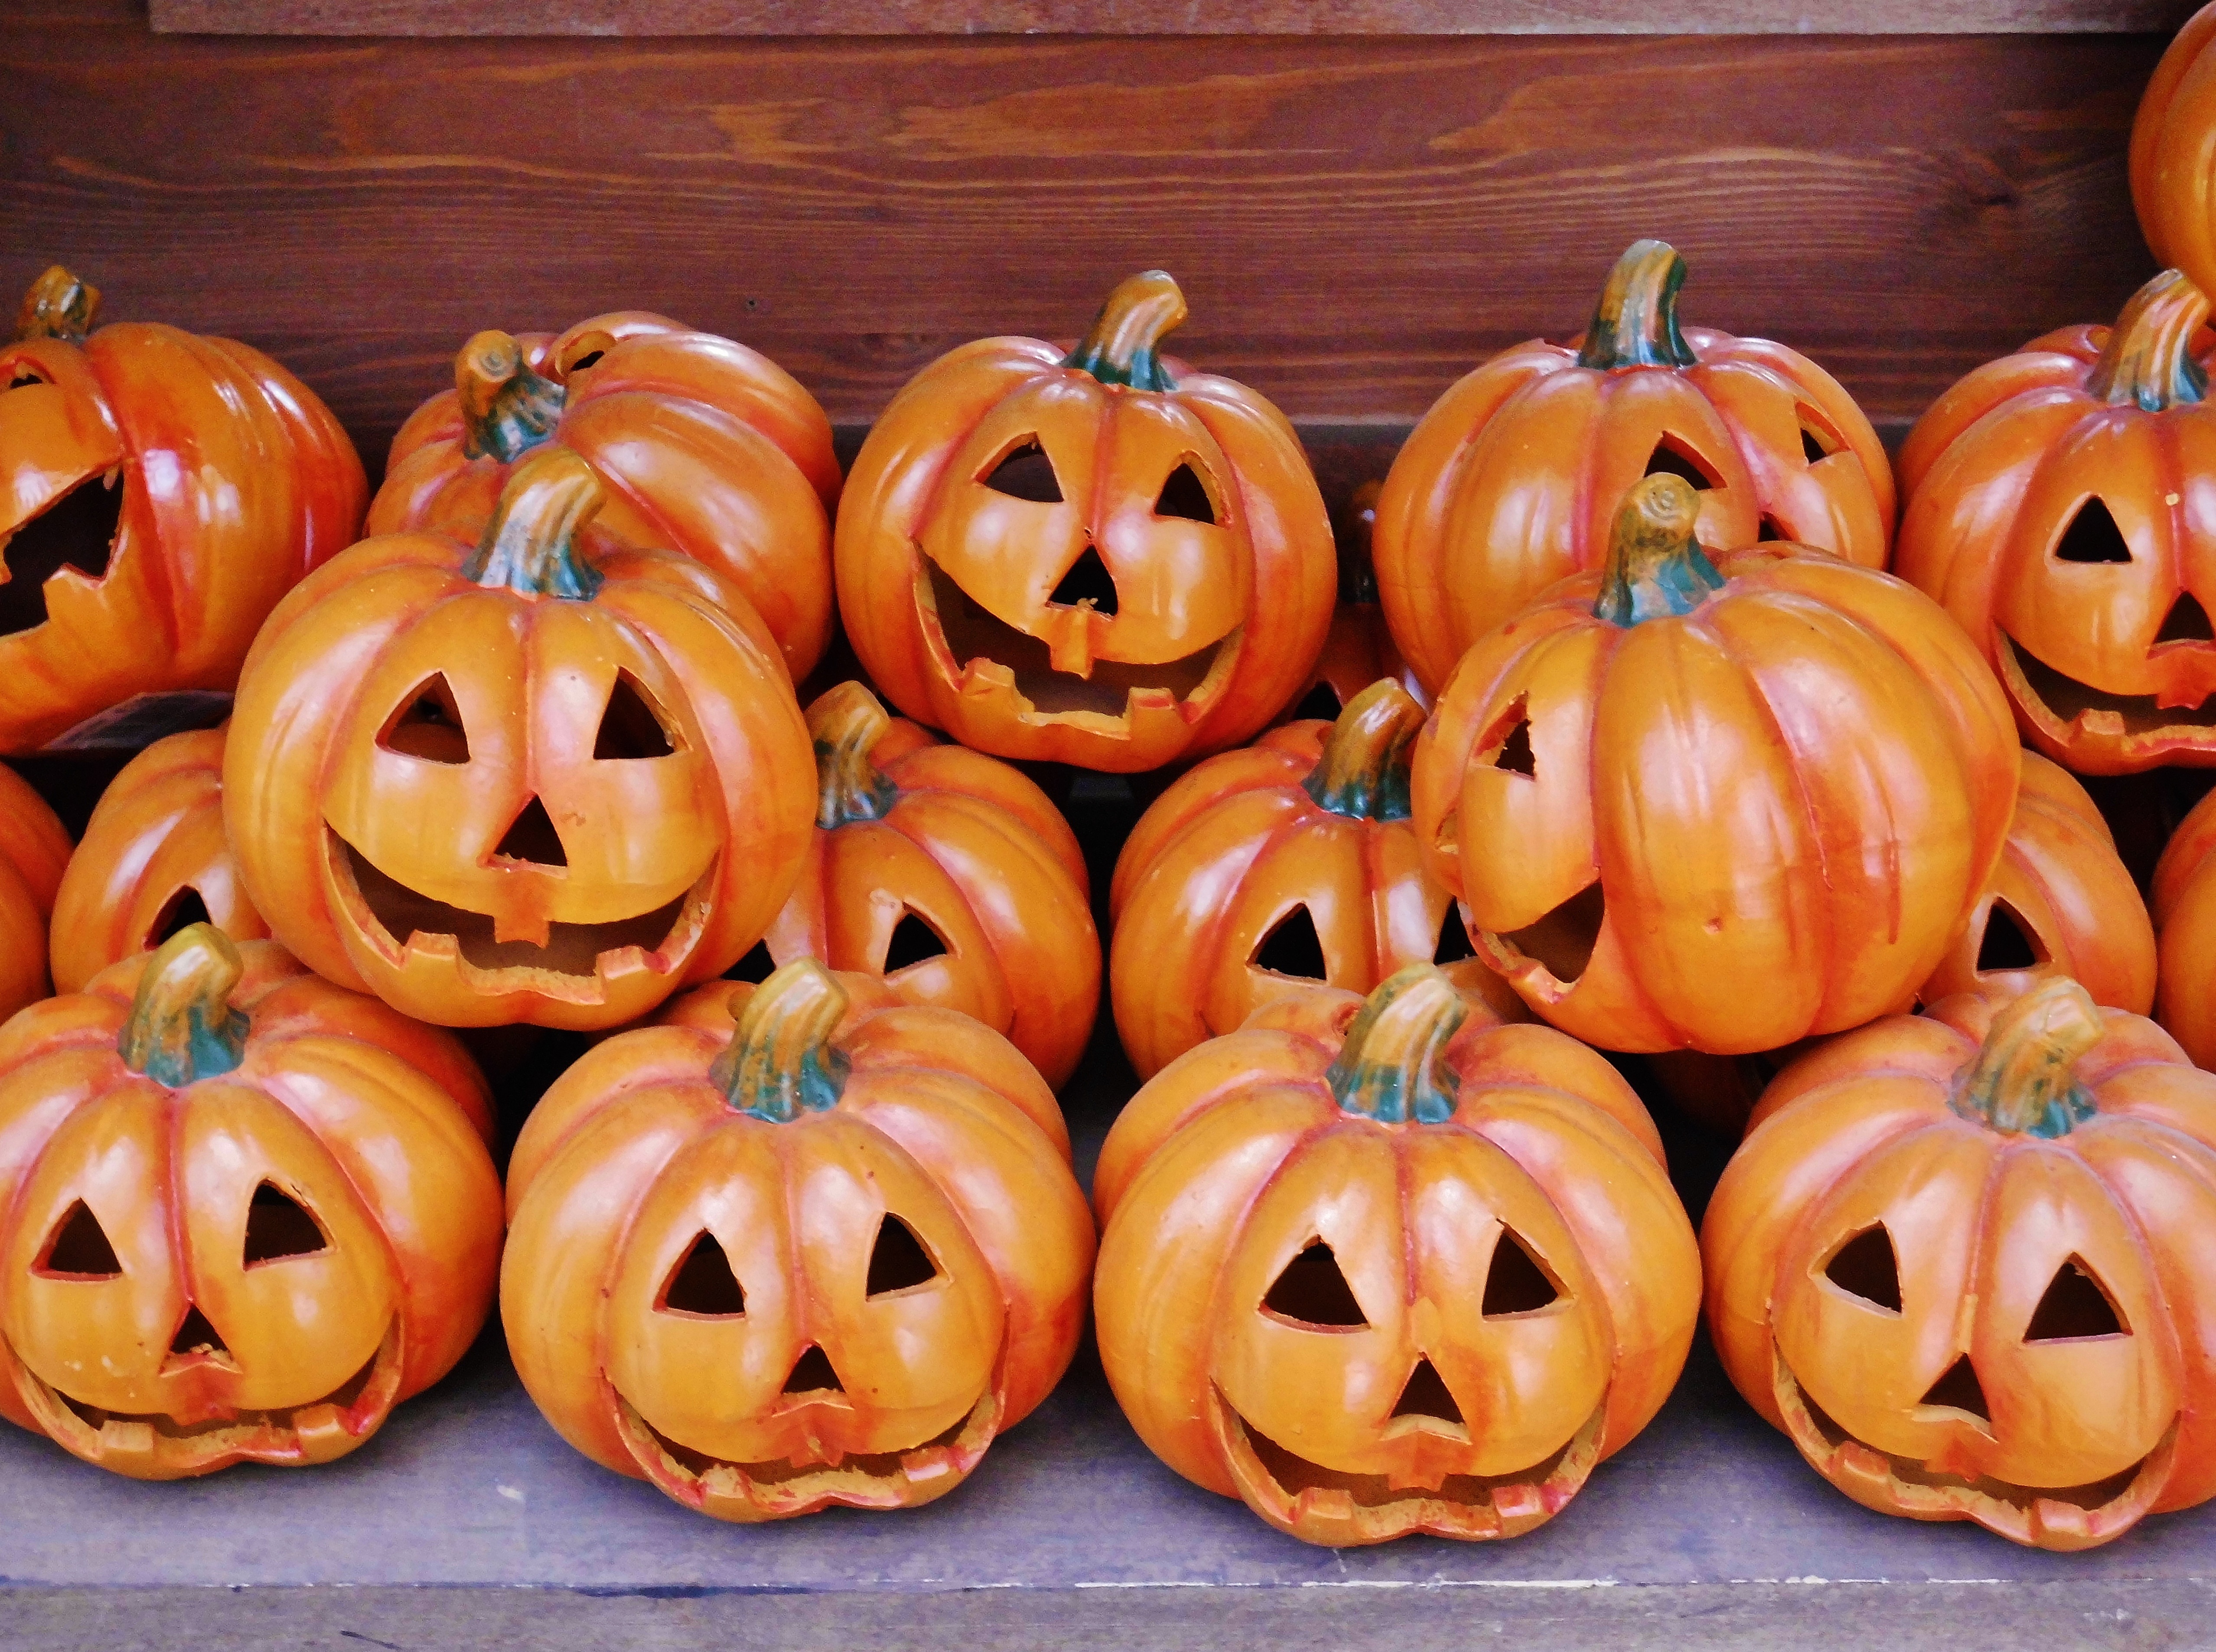 An assortment of pumpkins for the Halloween holiday